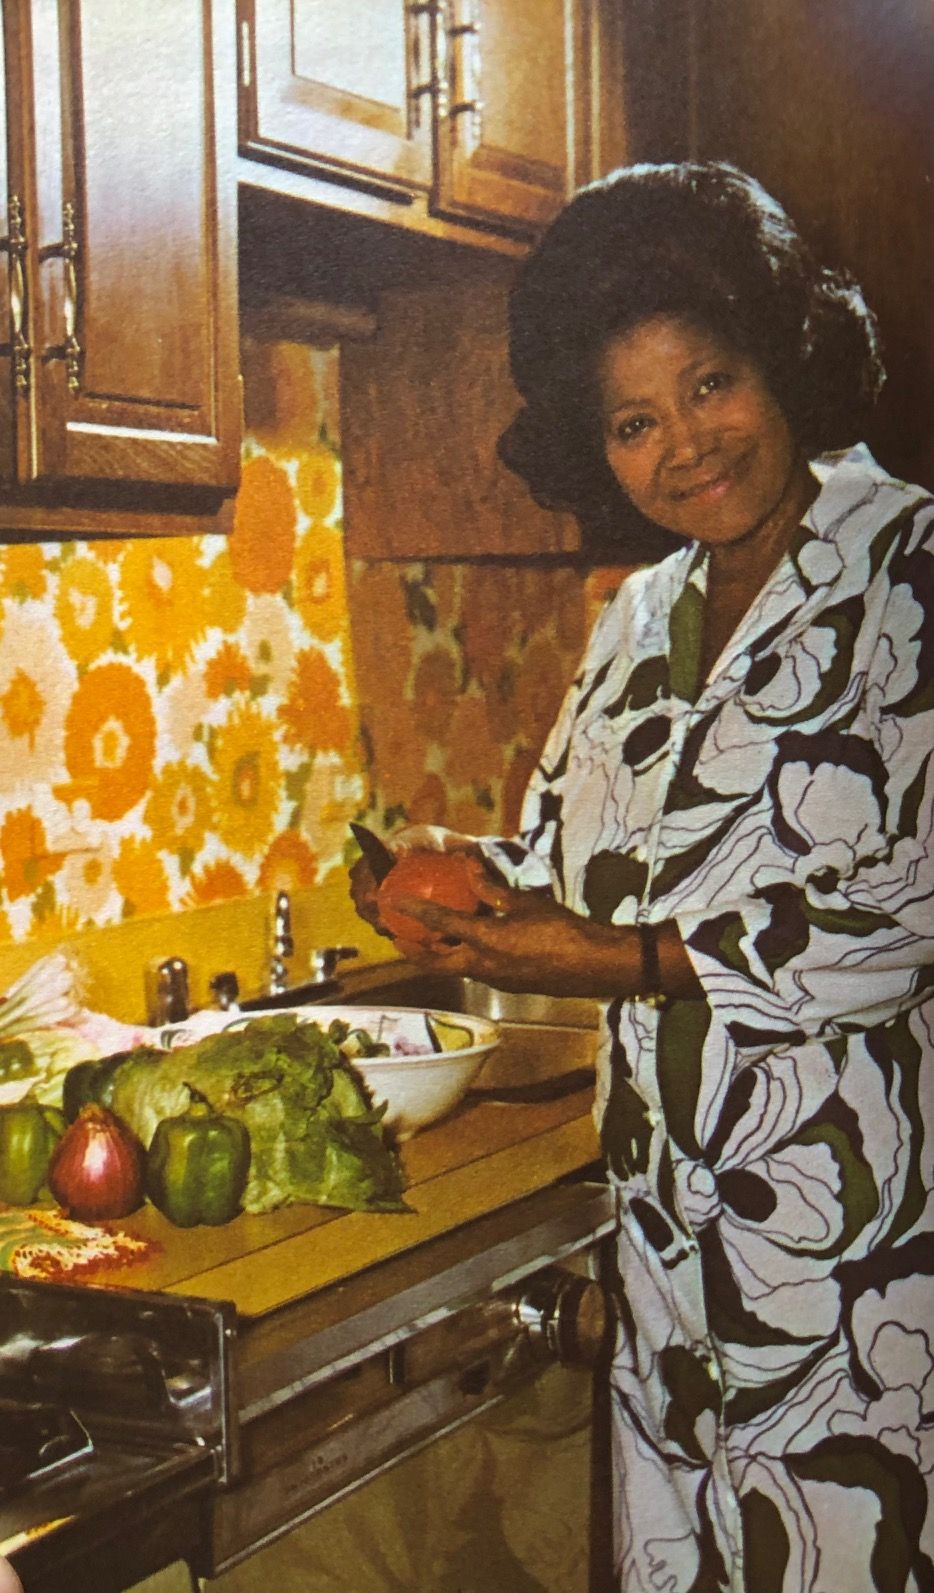 (African American) Jackson, Mahalia.  Mahalia Jackson Cooks Soul